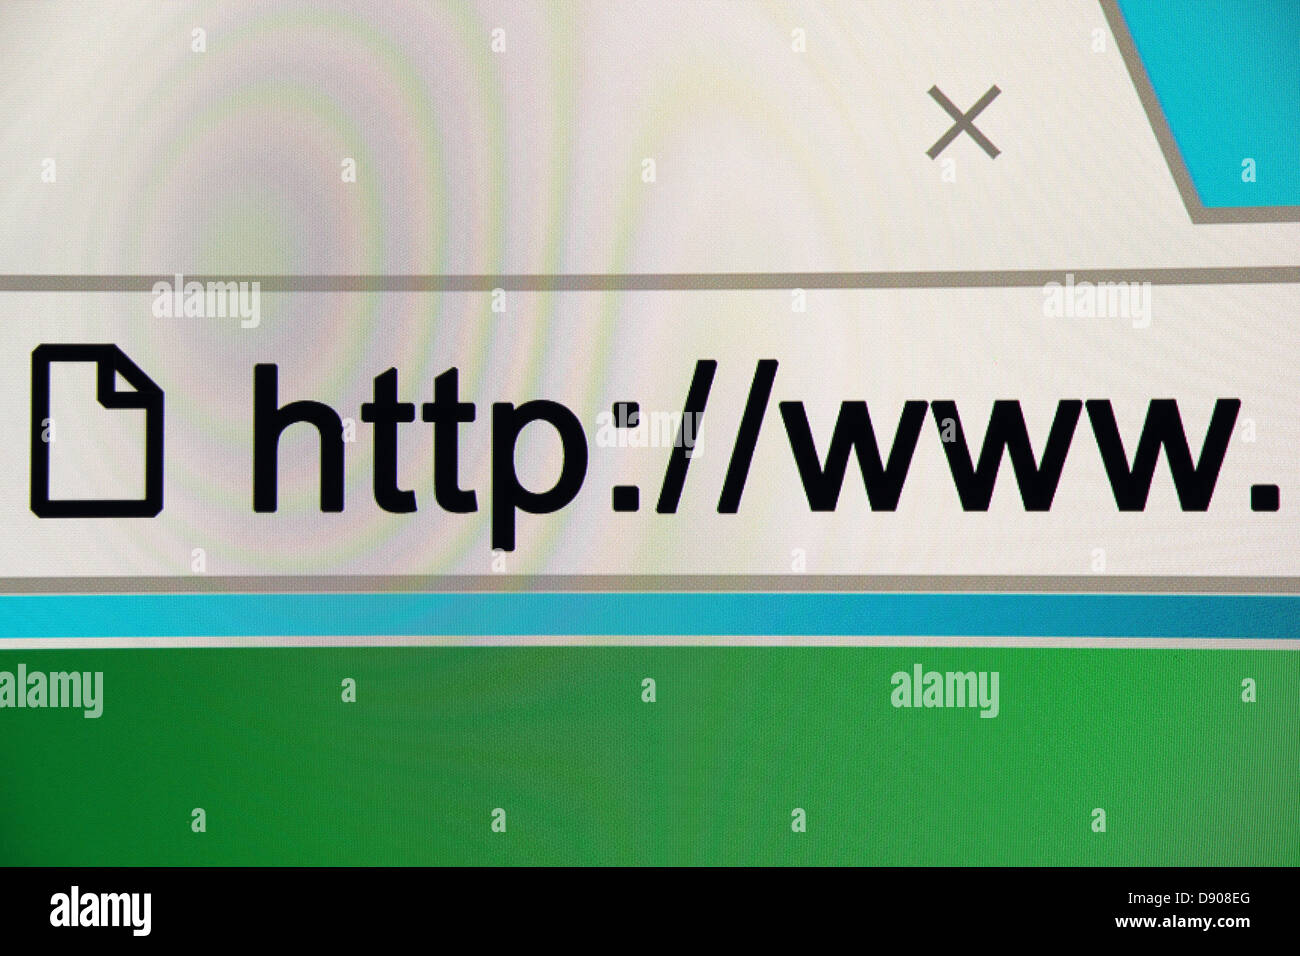 http www browser bar, Internet address Stock Photo